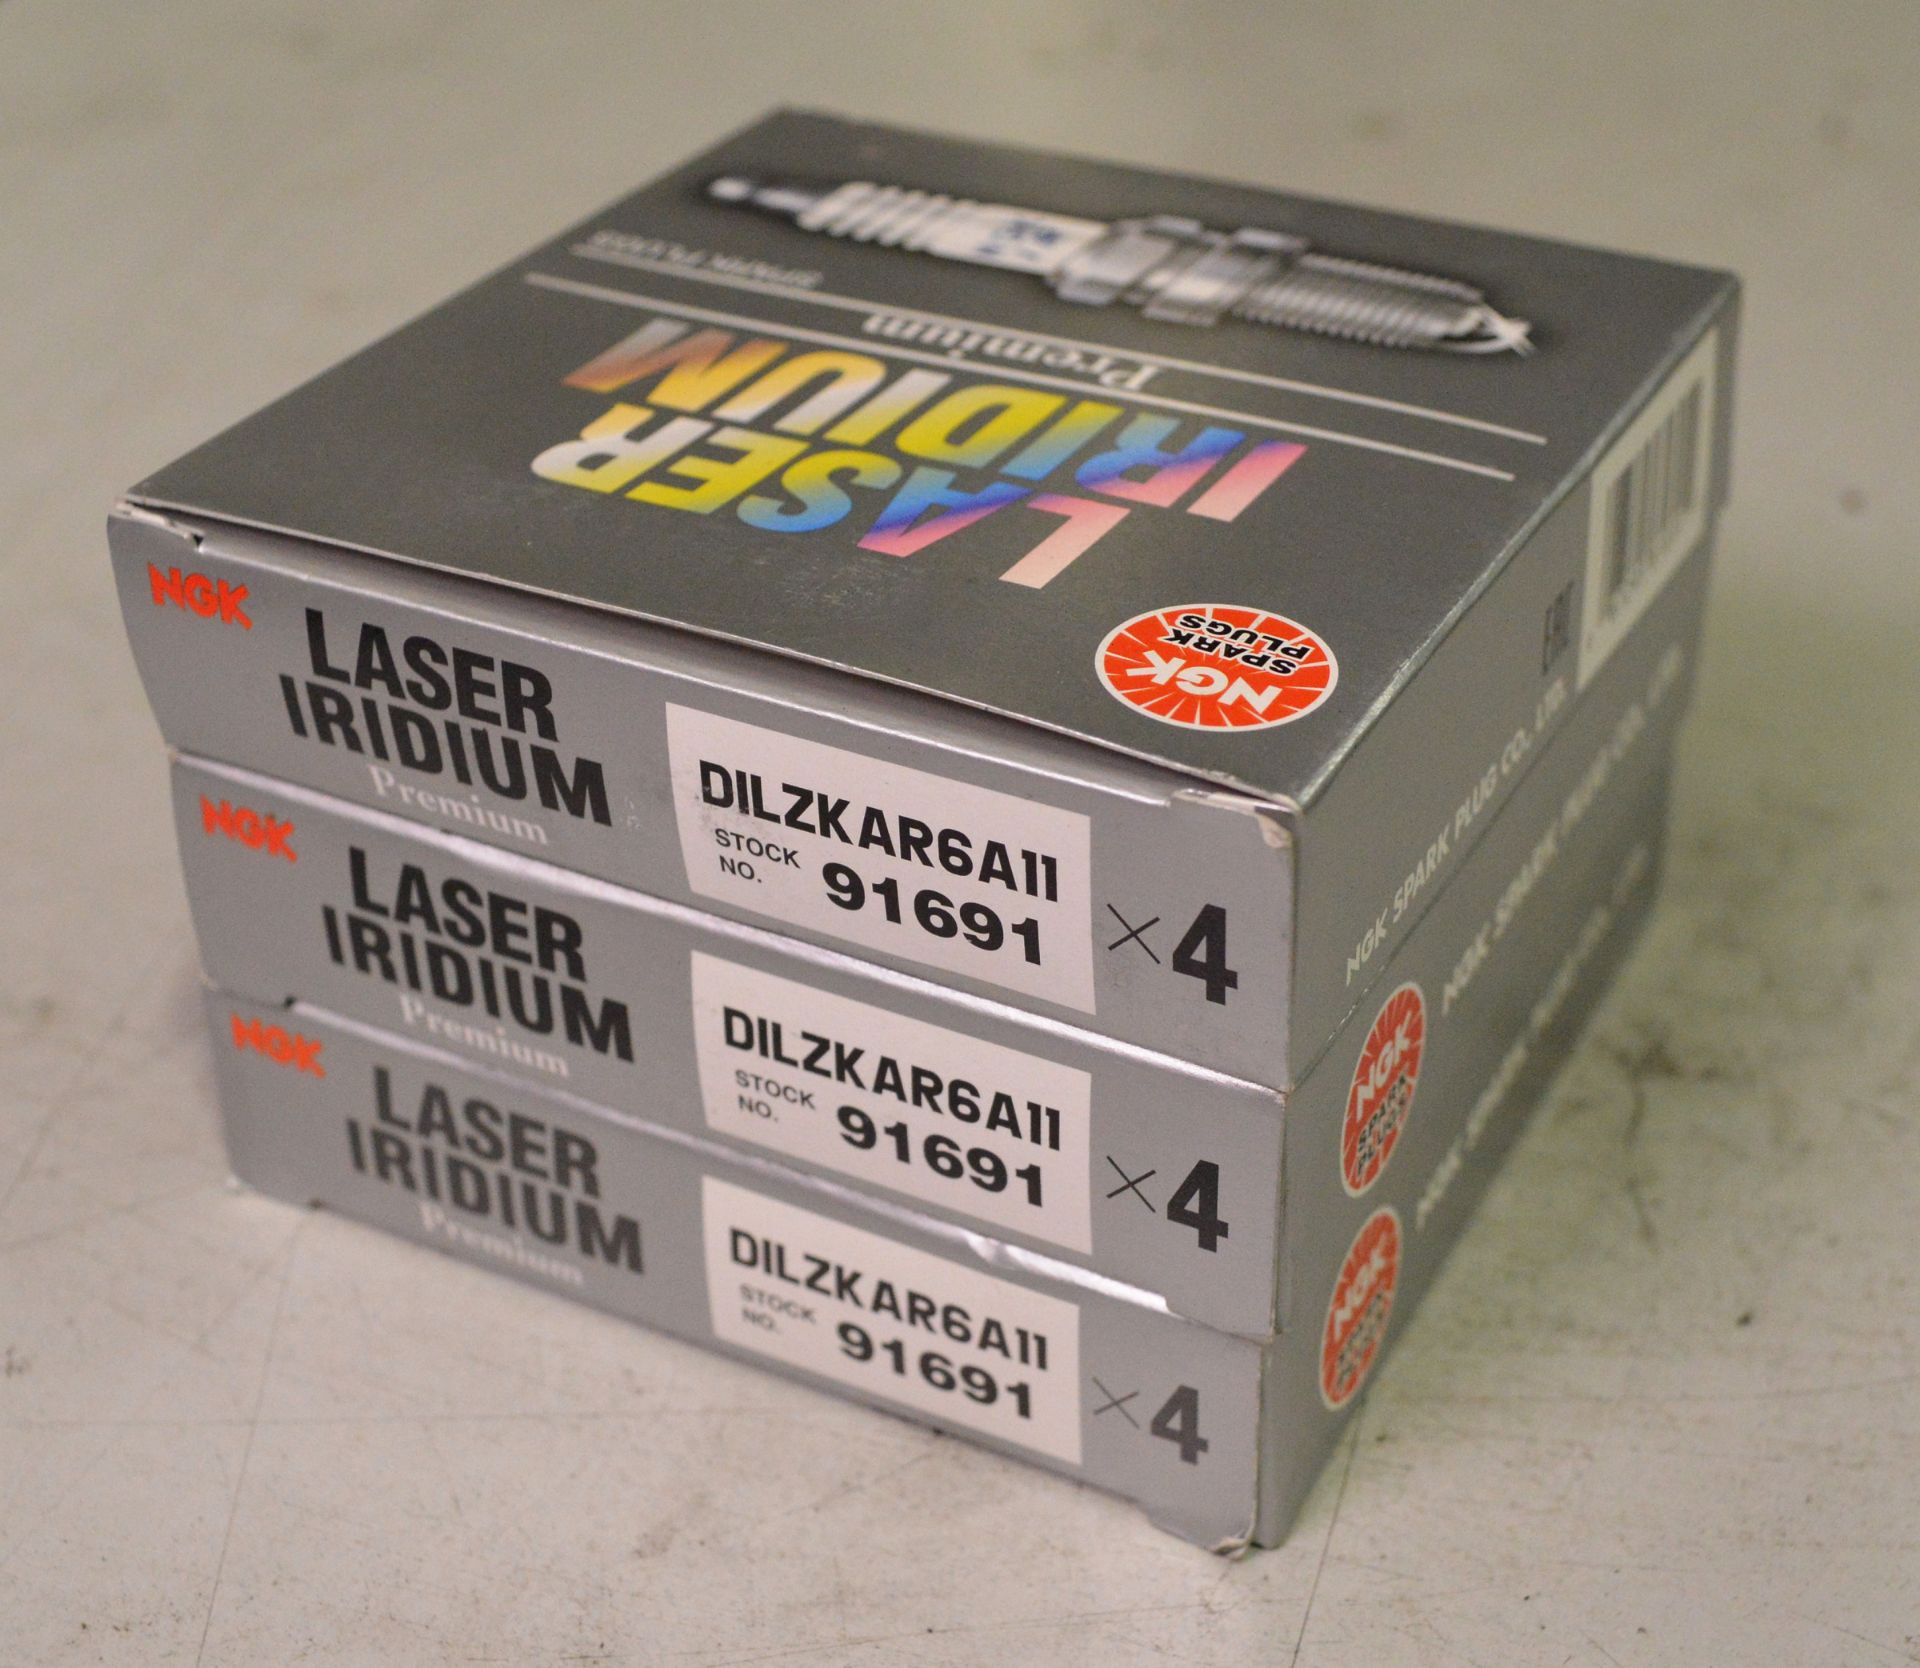 NGK Laser Platinum spark plugs 4 per box - 91691 - DILZKAR6A11 - 3 boxes